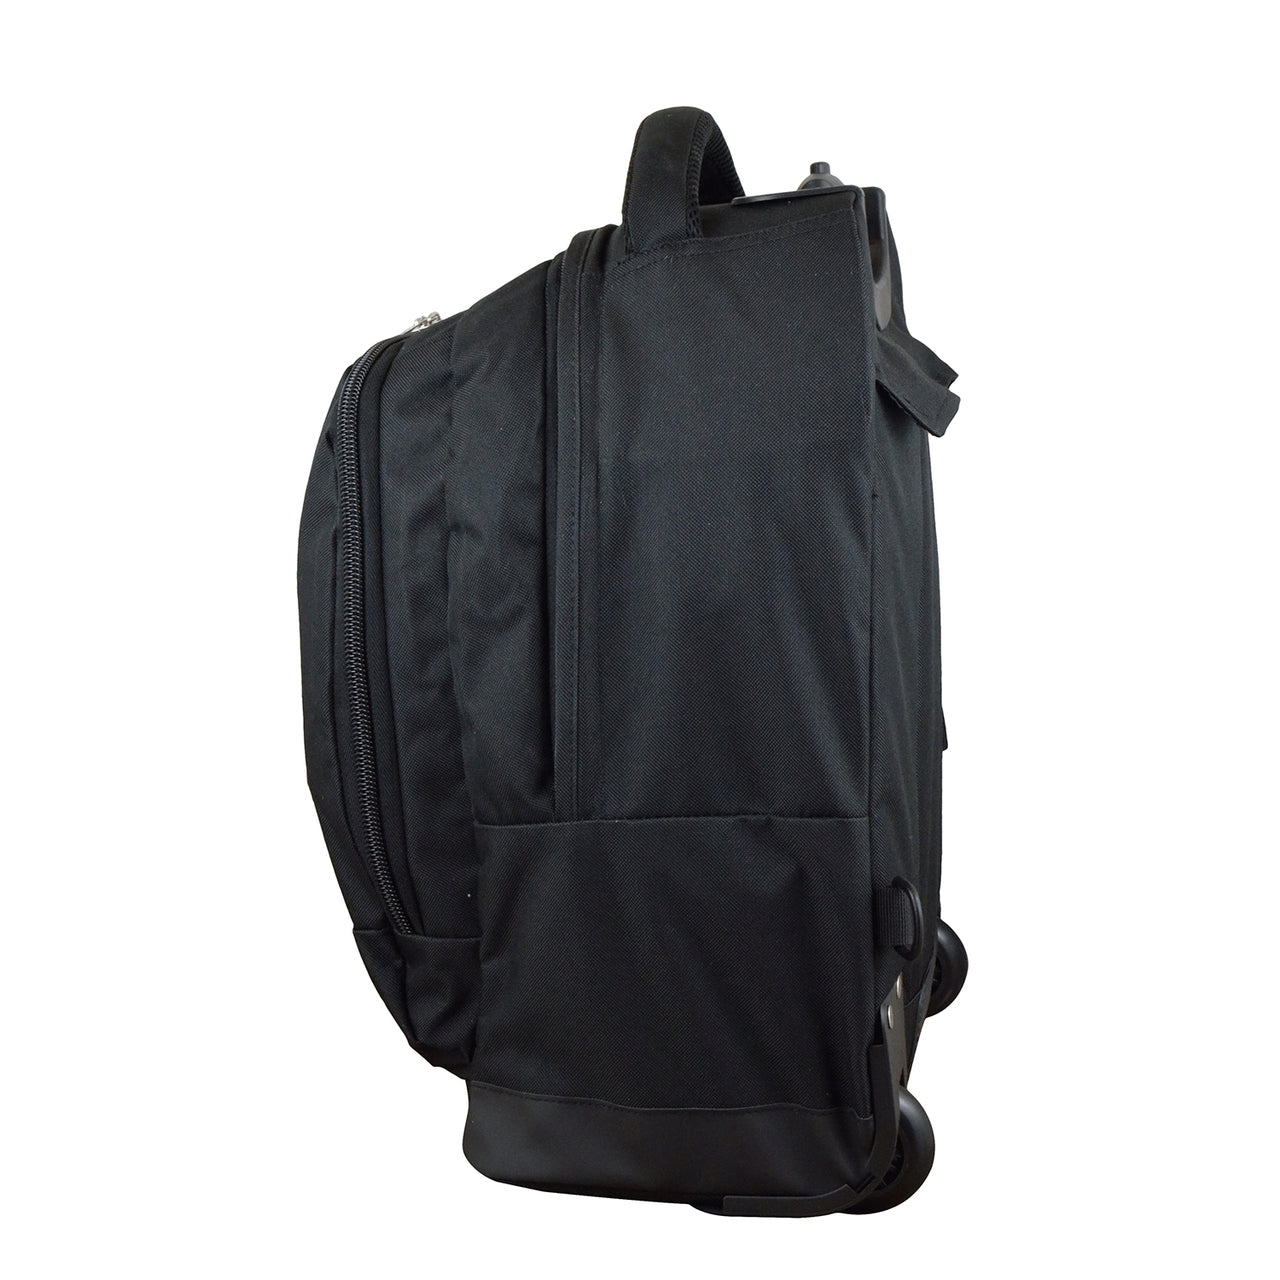 Stanford Premium Wheeled Backpack in Black